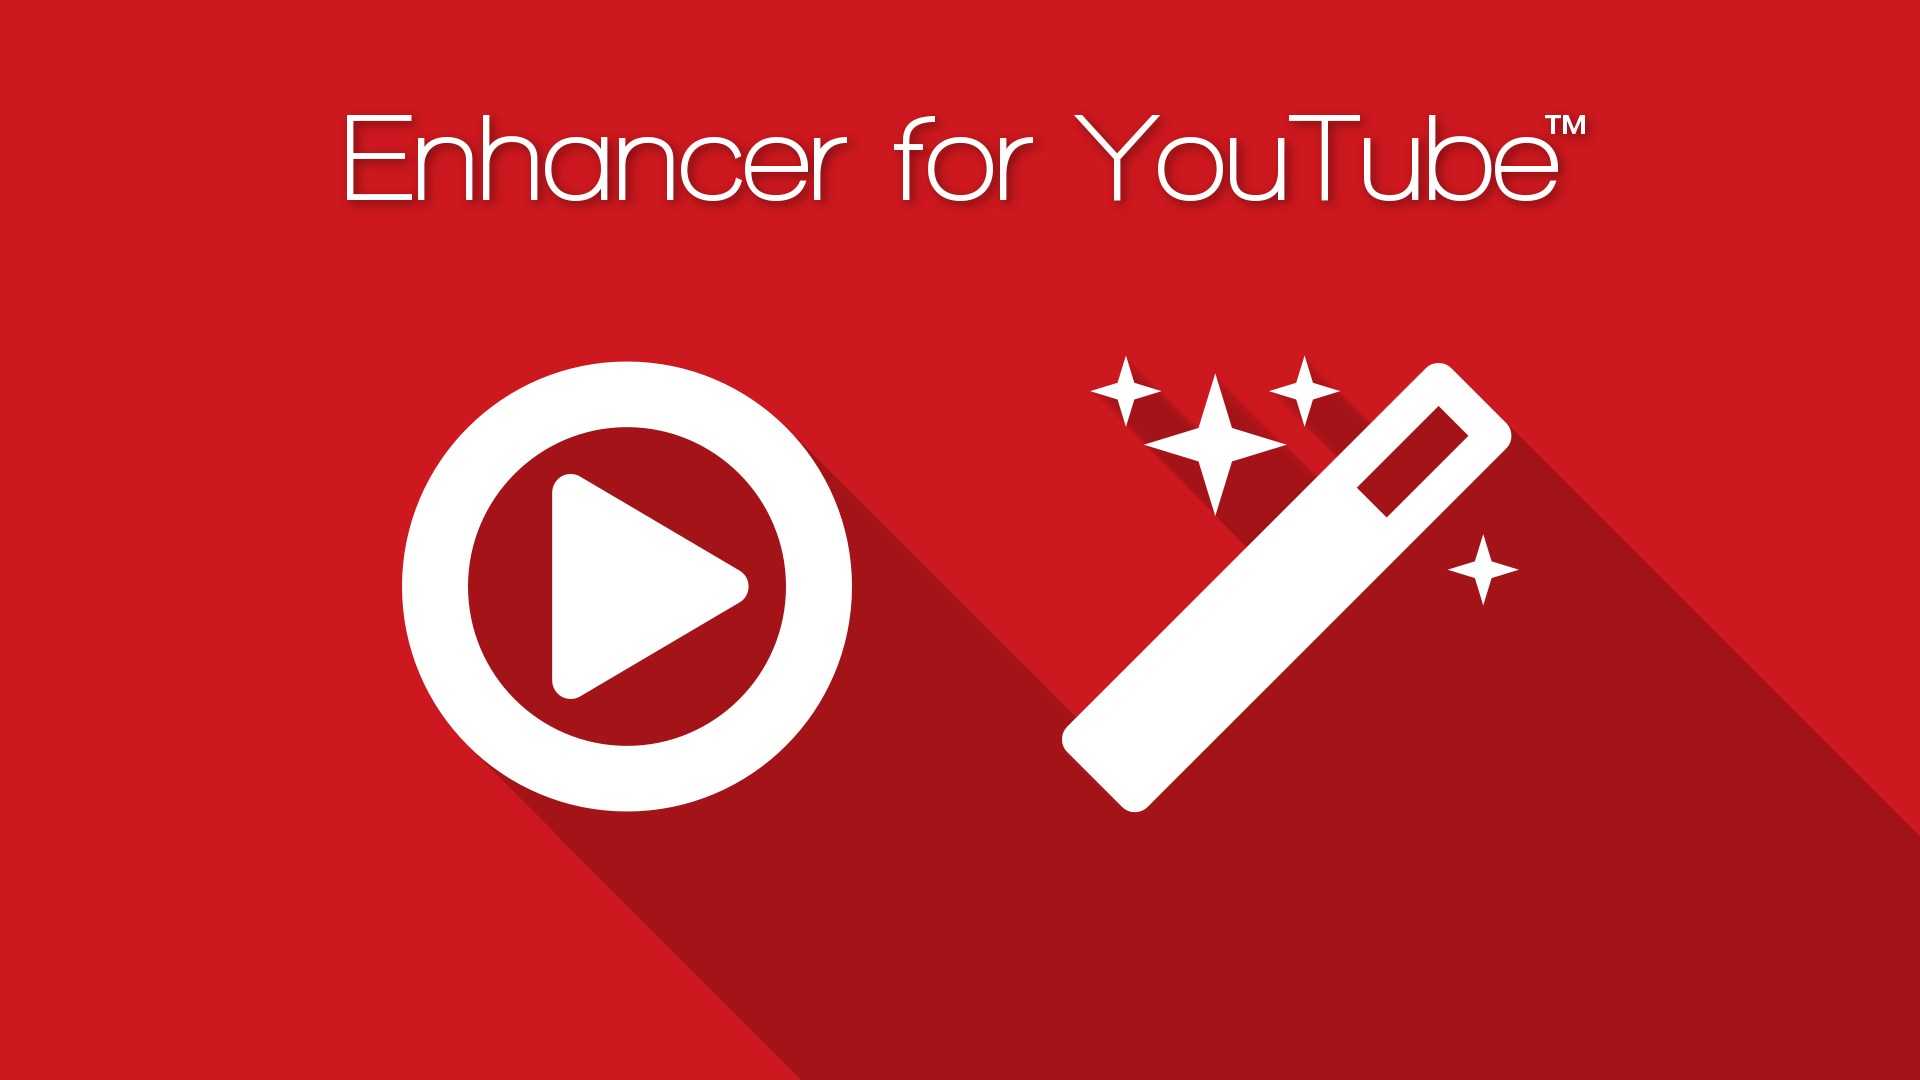 Youtube fora. Youtube Enhancer. Enhancer for youtube™. Enhancer for youtube icona. Enhancer for youtube™ CSS animation.